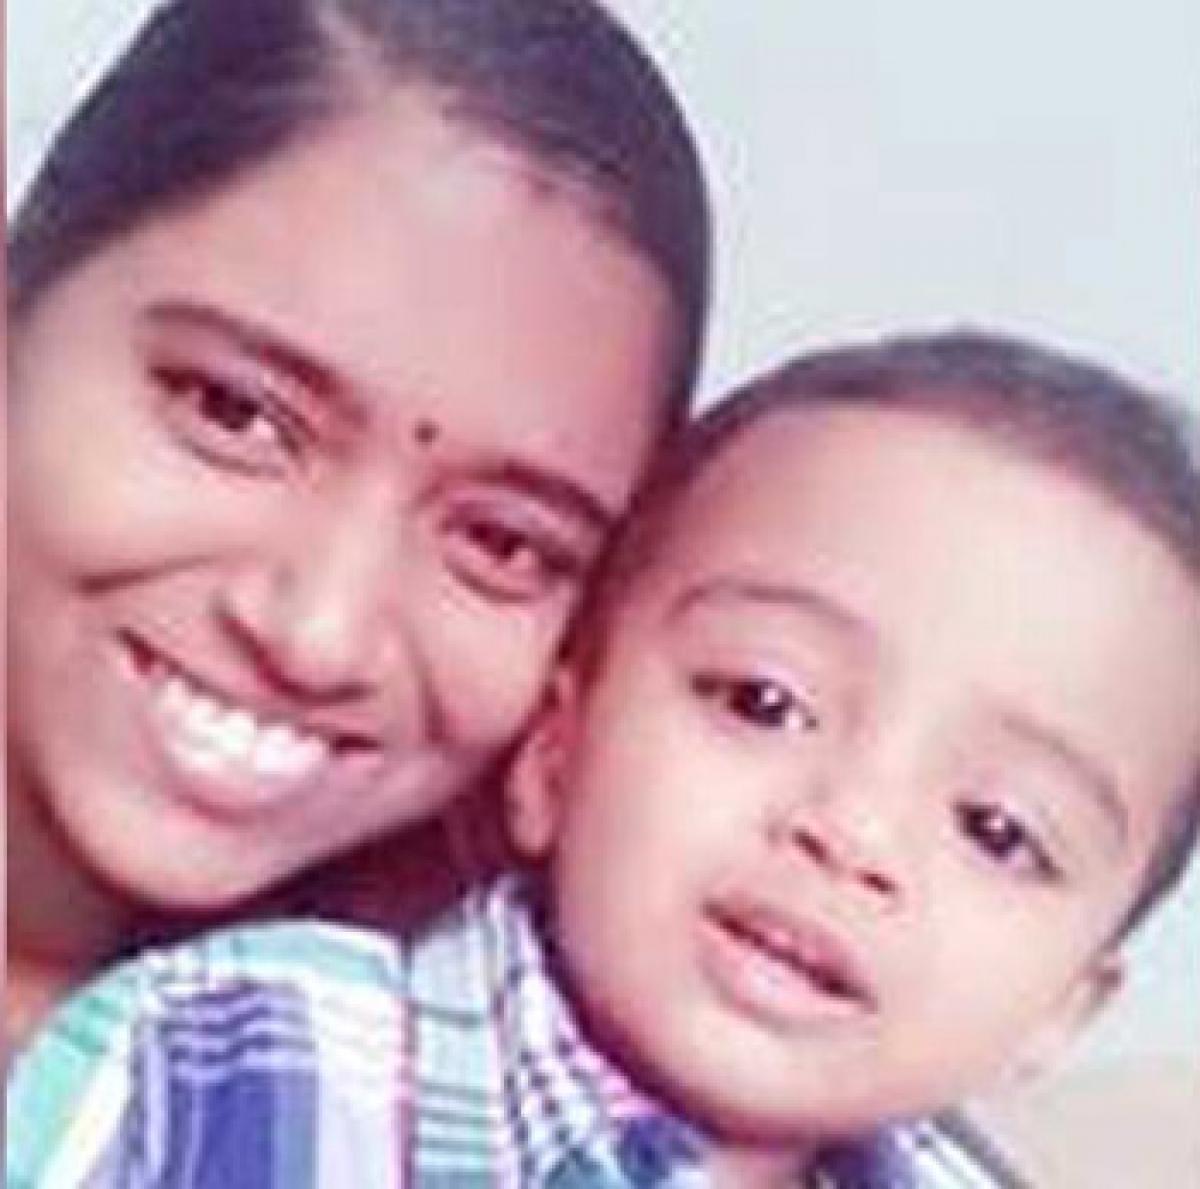 Kerala nurse, son killed in Libya attack